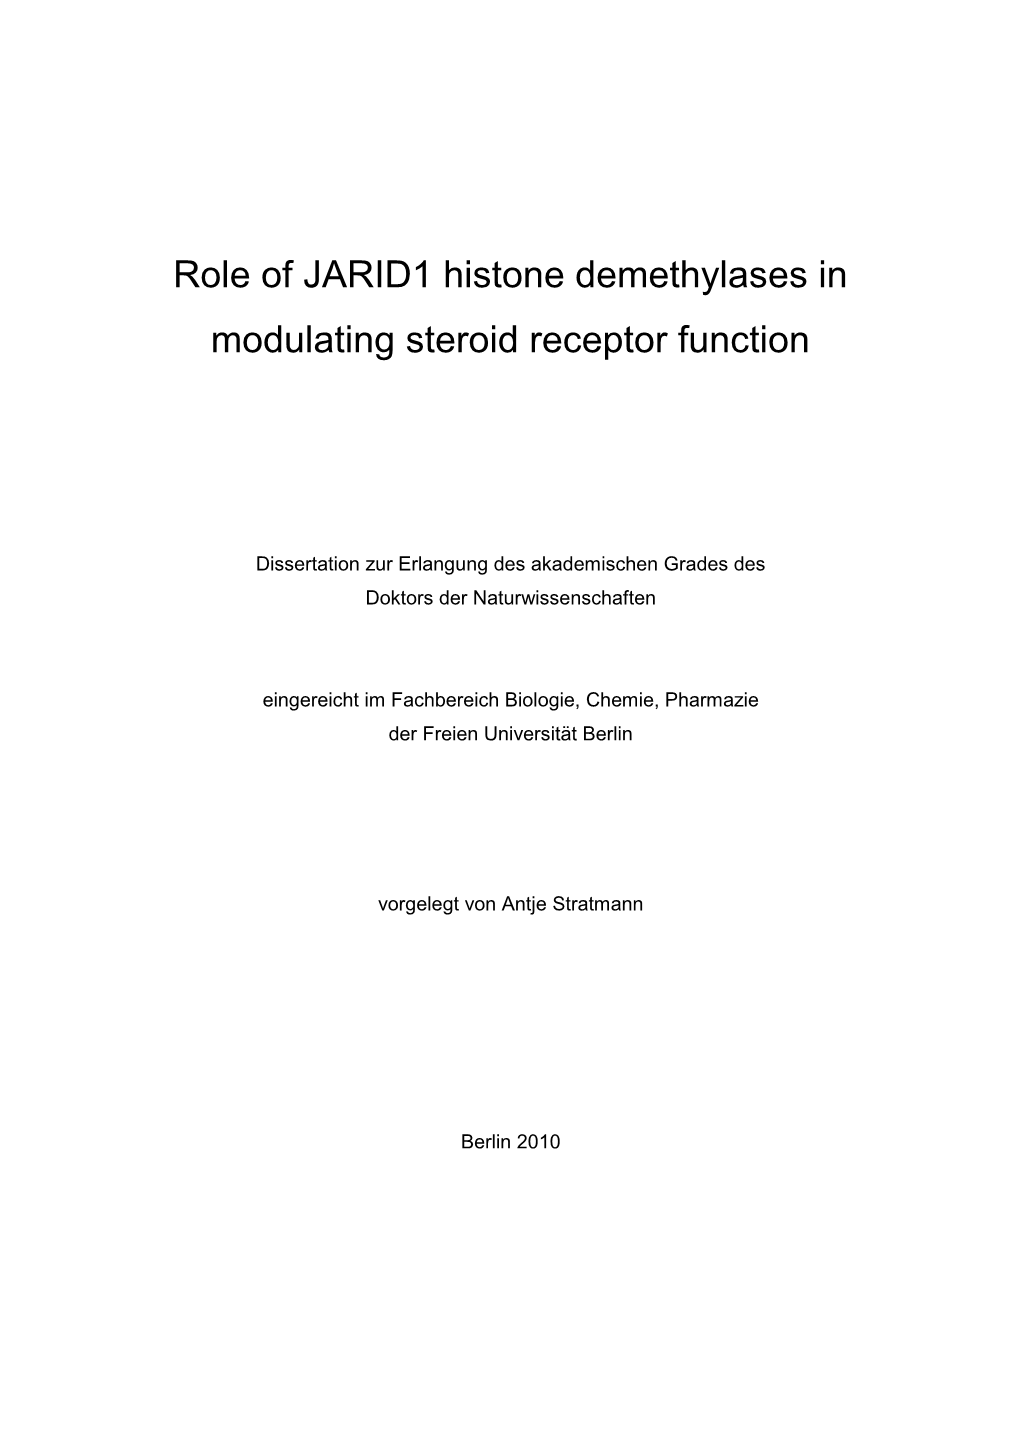 Role of JARID1 Histone Demethylases in Modulating Steroid Receptor Function